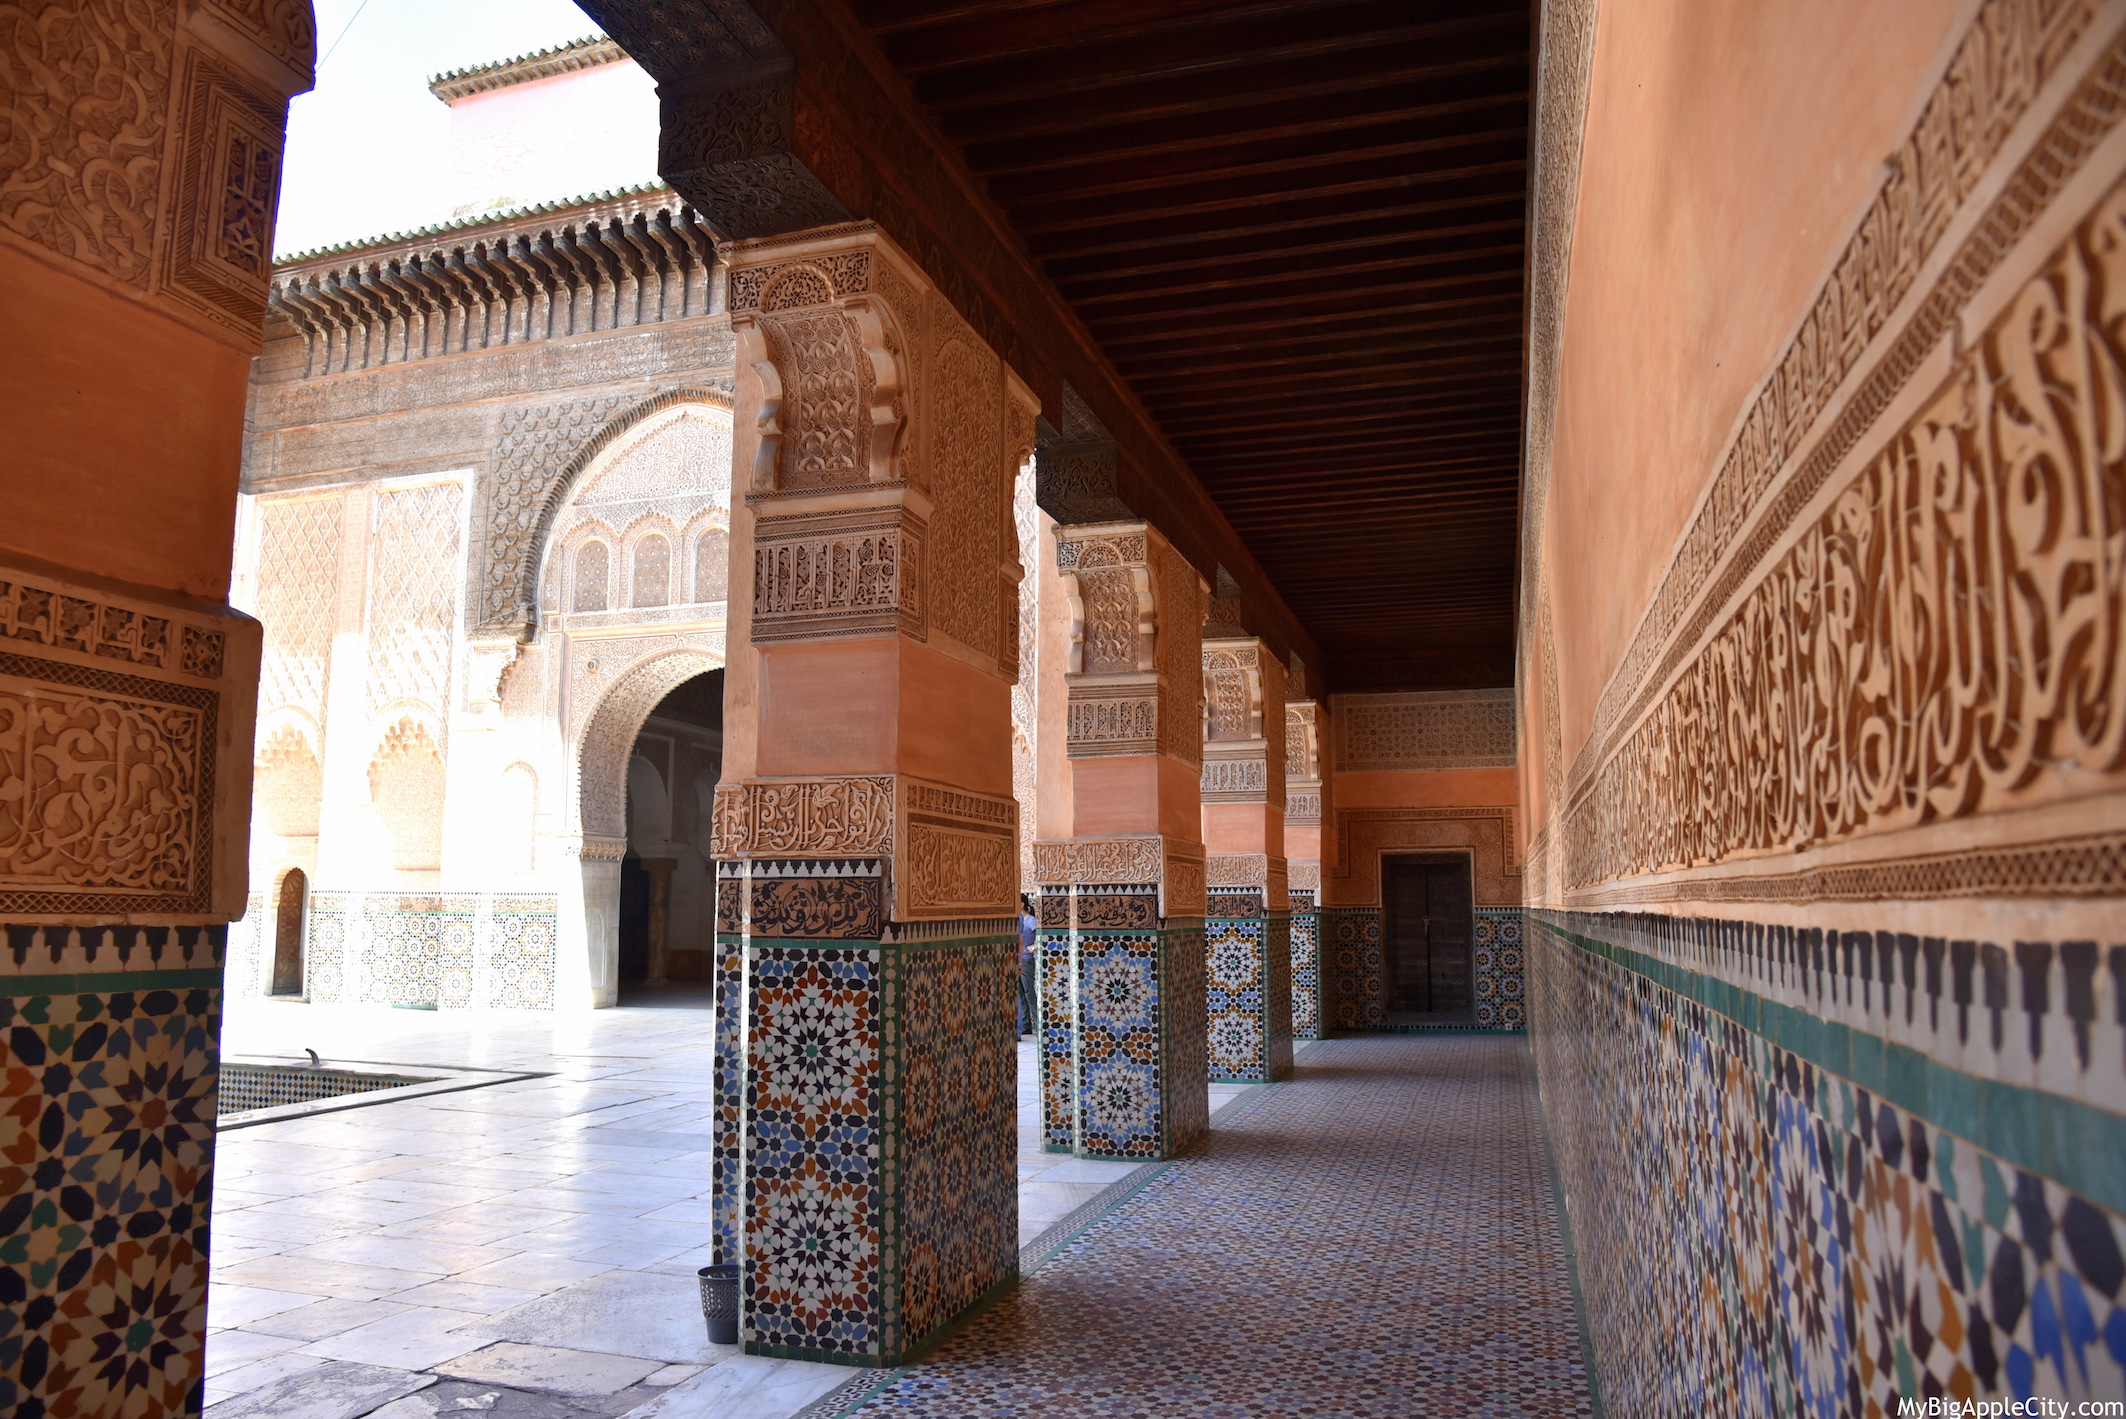 Visiter-musee-Marrakech-Travel-Blogger-2016-MyBigAppleCity